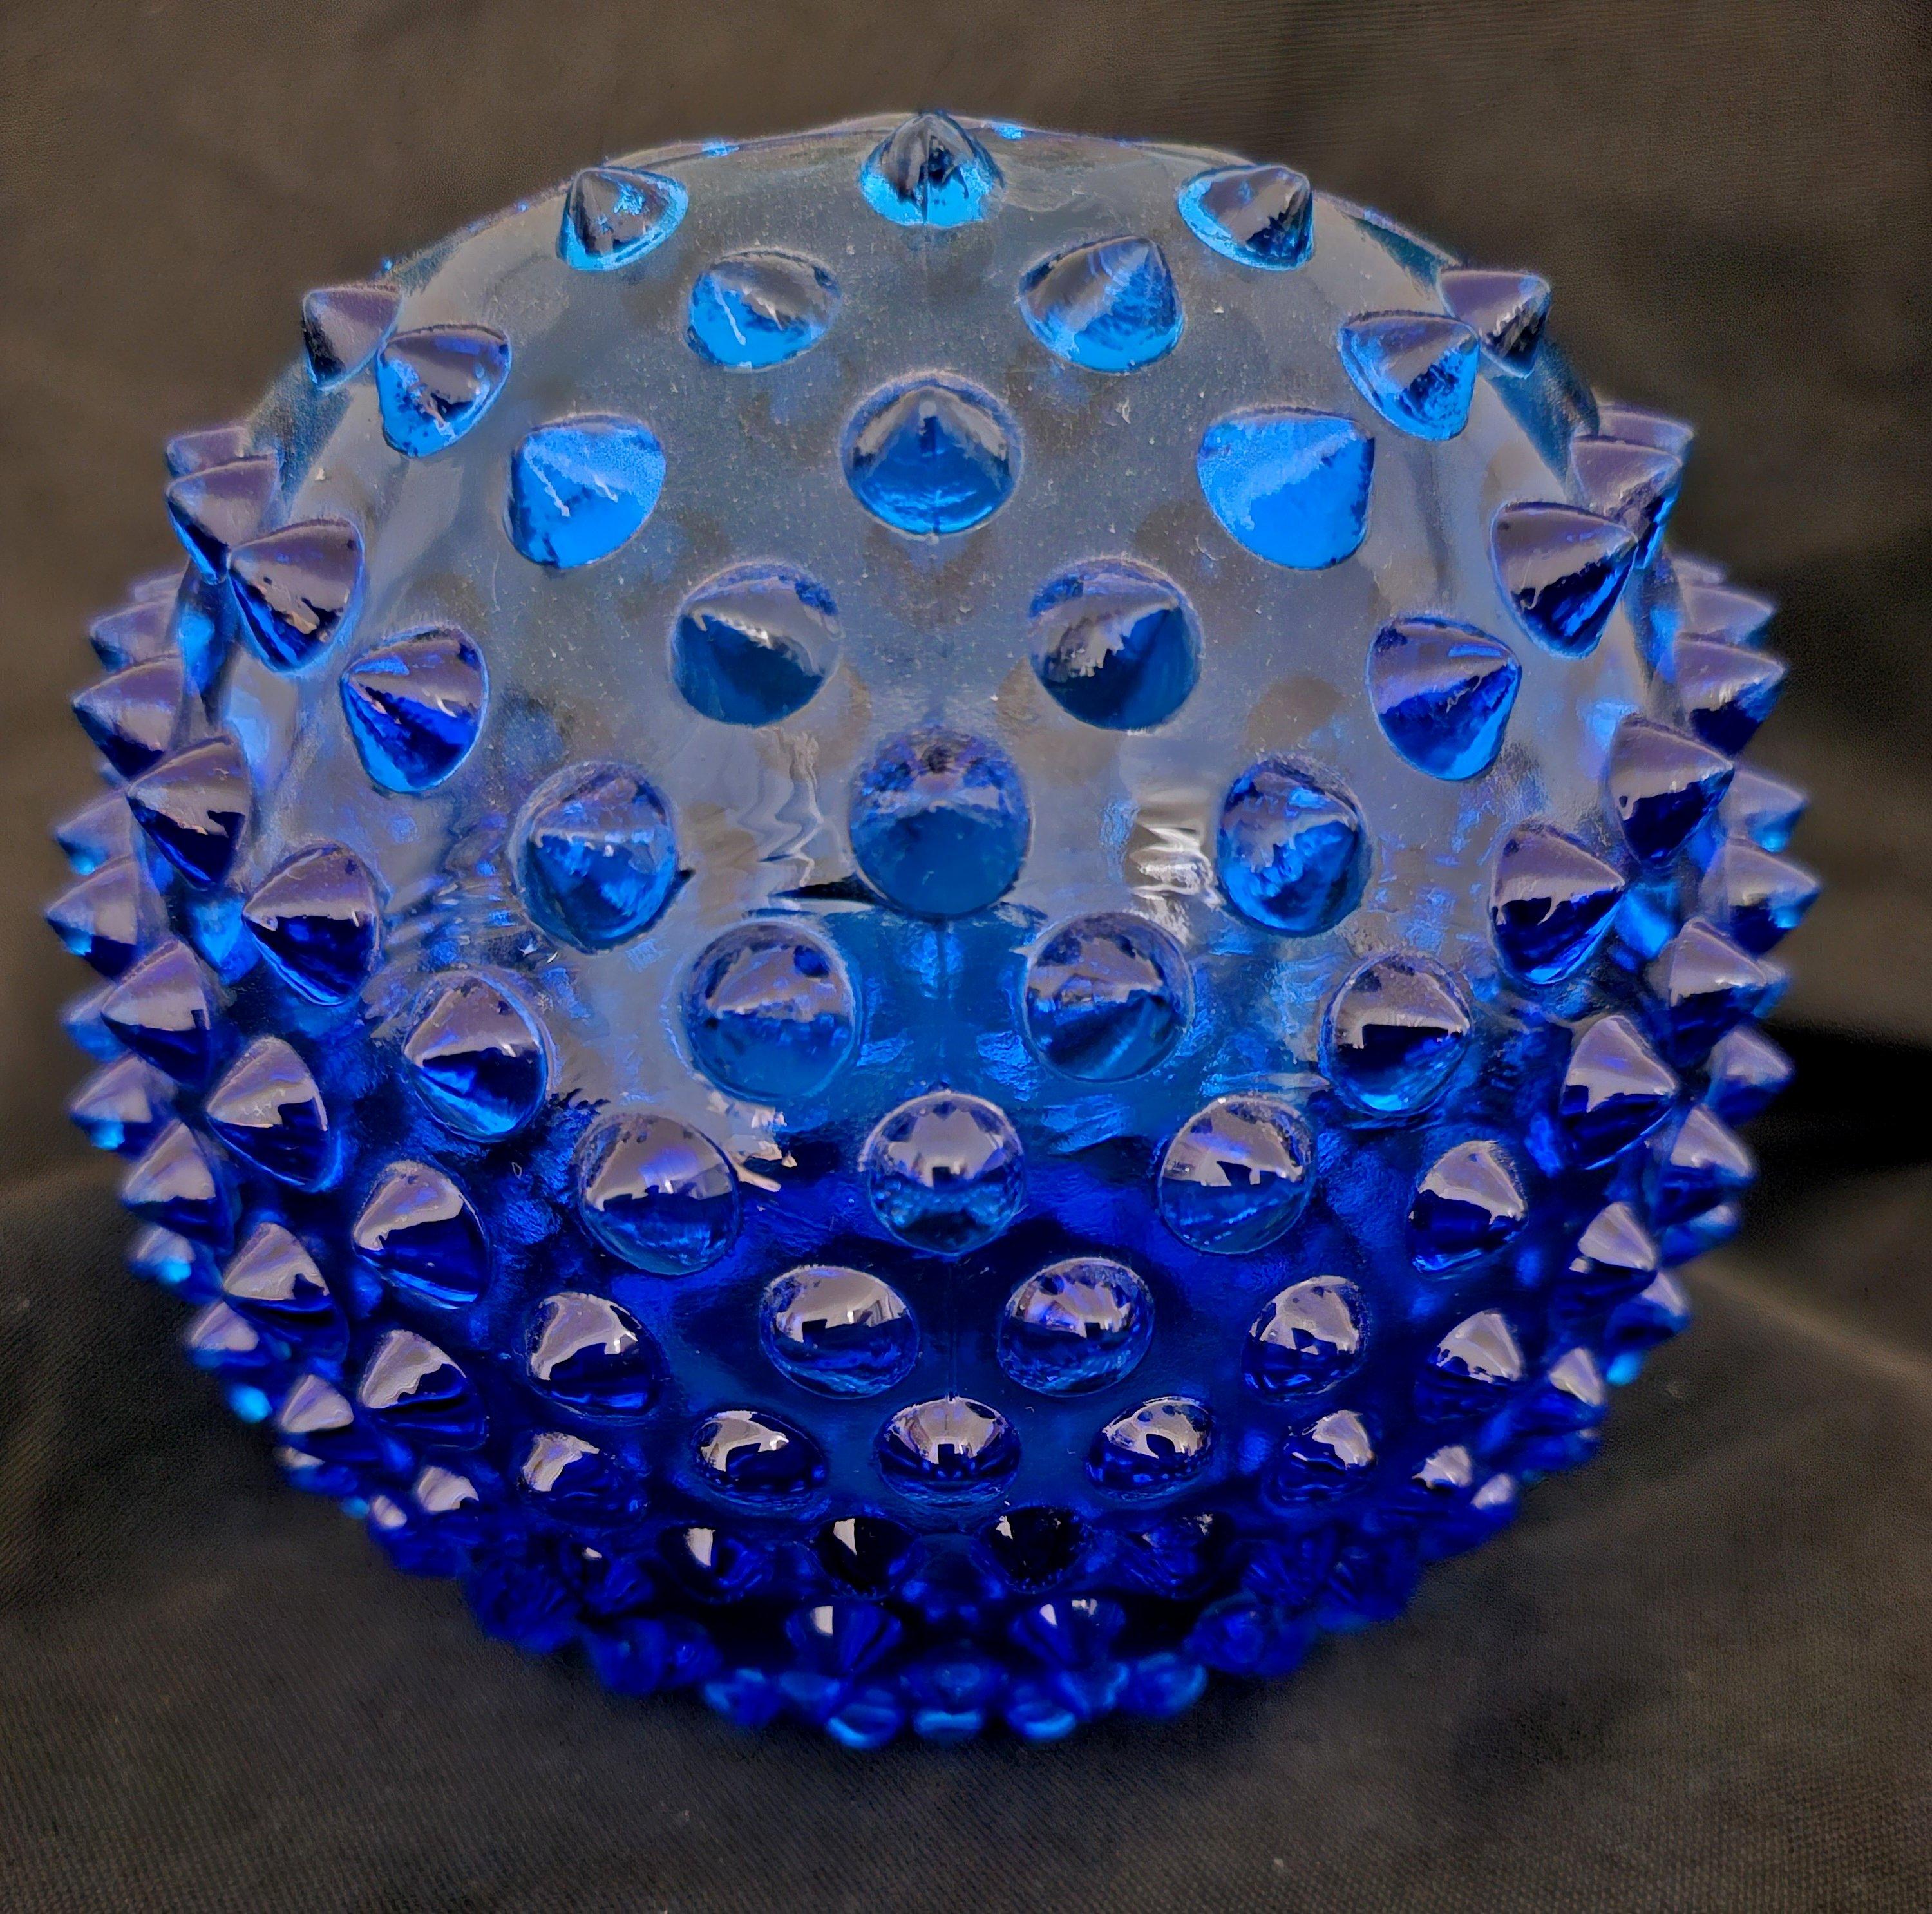 20th Century Vintage Fenton Royal Blue Hobnail Orb, Ball-Shaped Ashtray / Bowl / Vessel For Sale